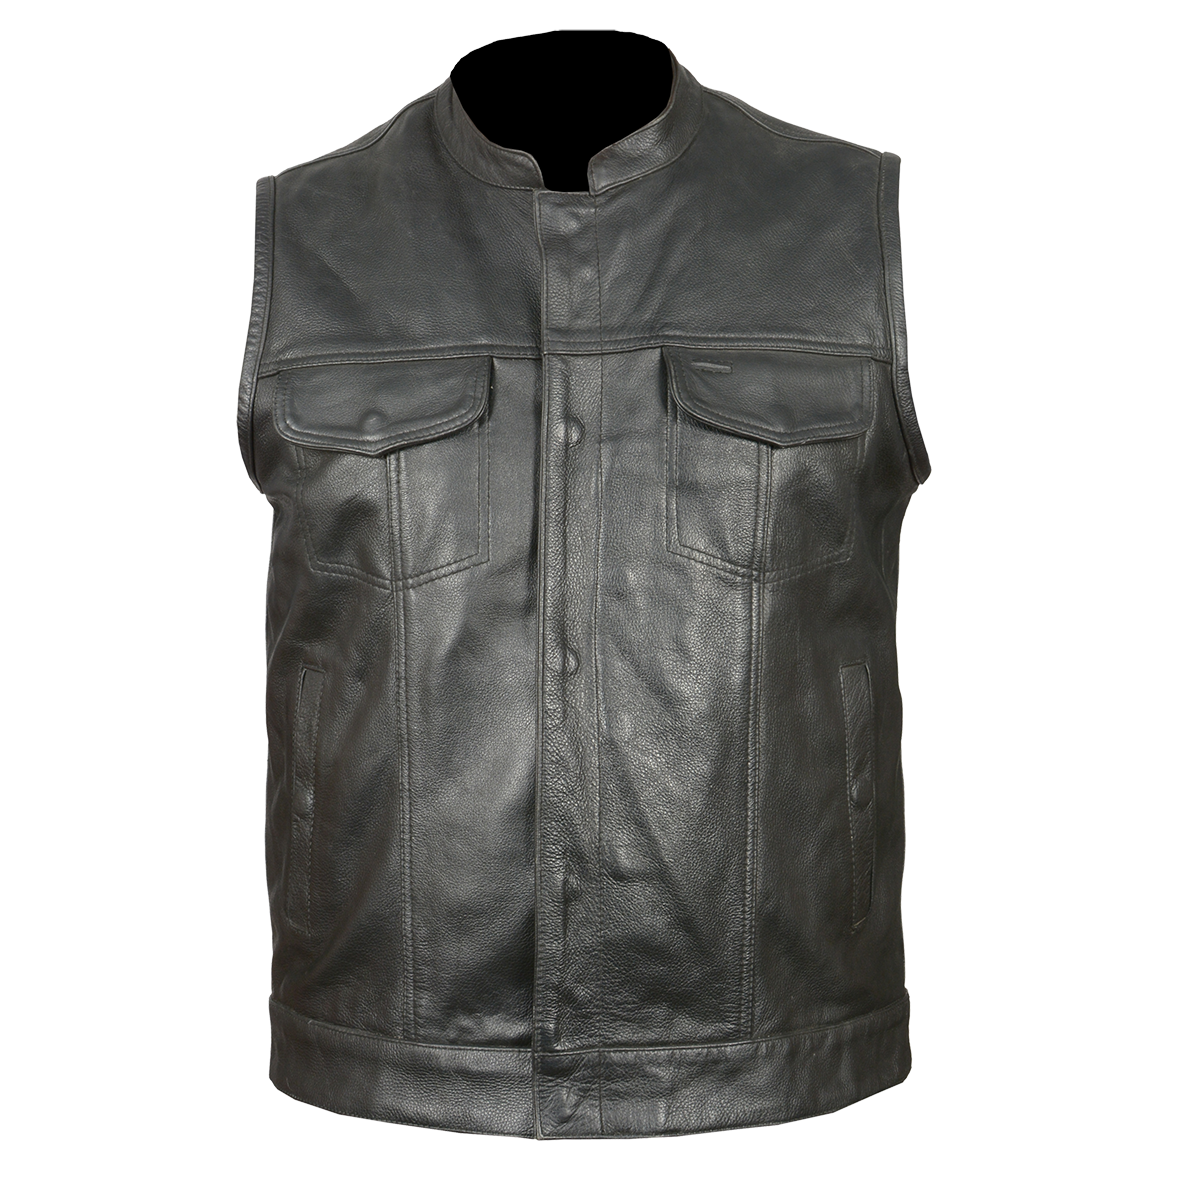 HMM914DB Vance Leather Distressed Brown Motorcycle Club Leather Vest